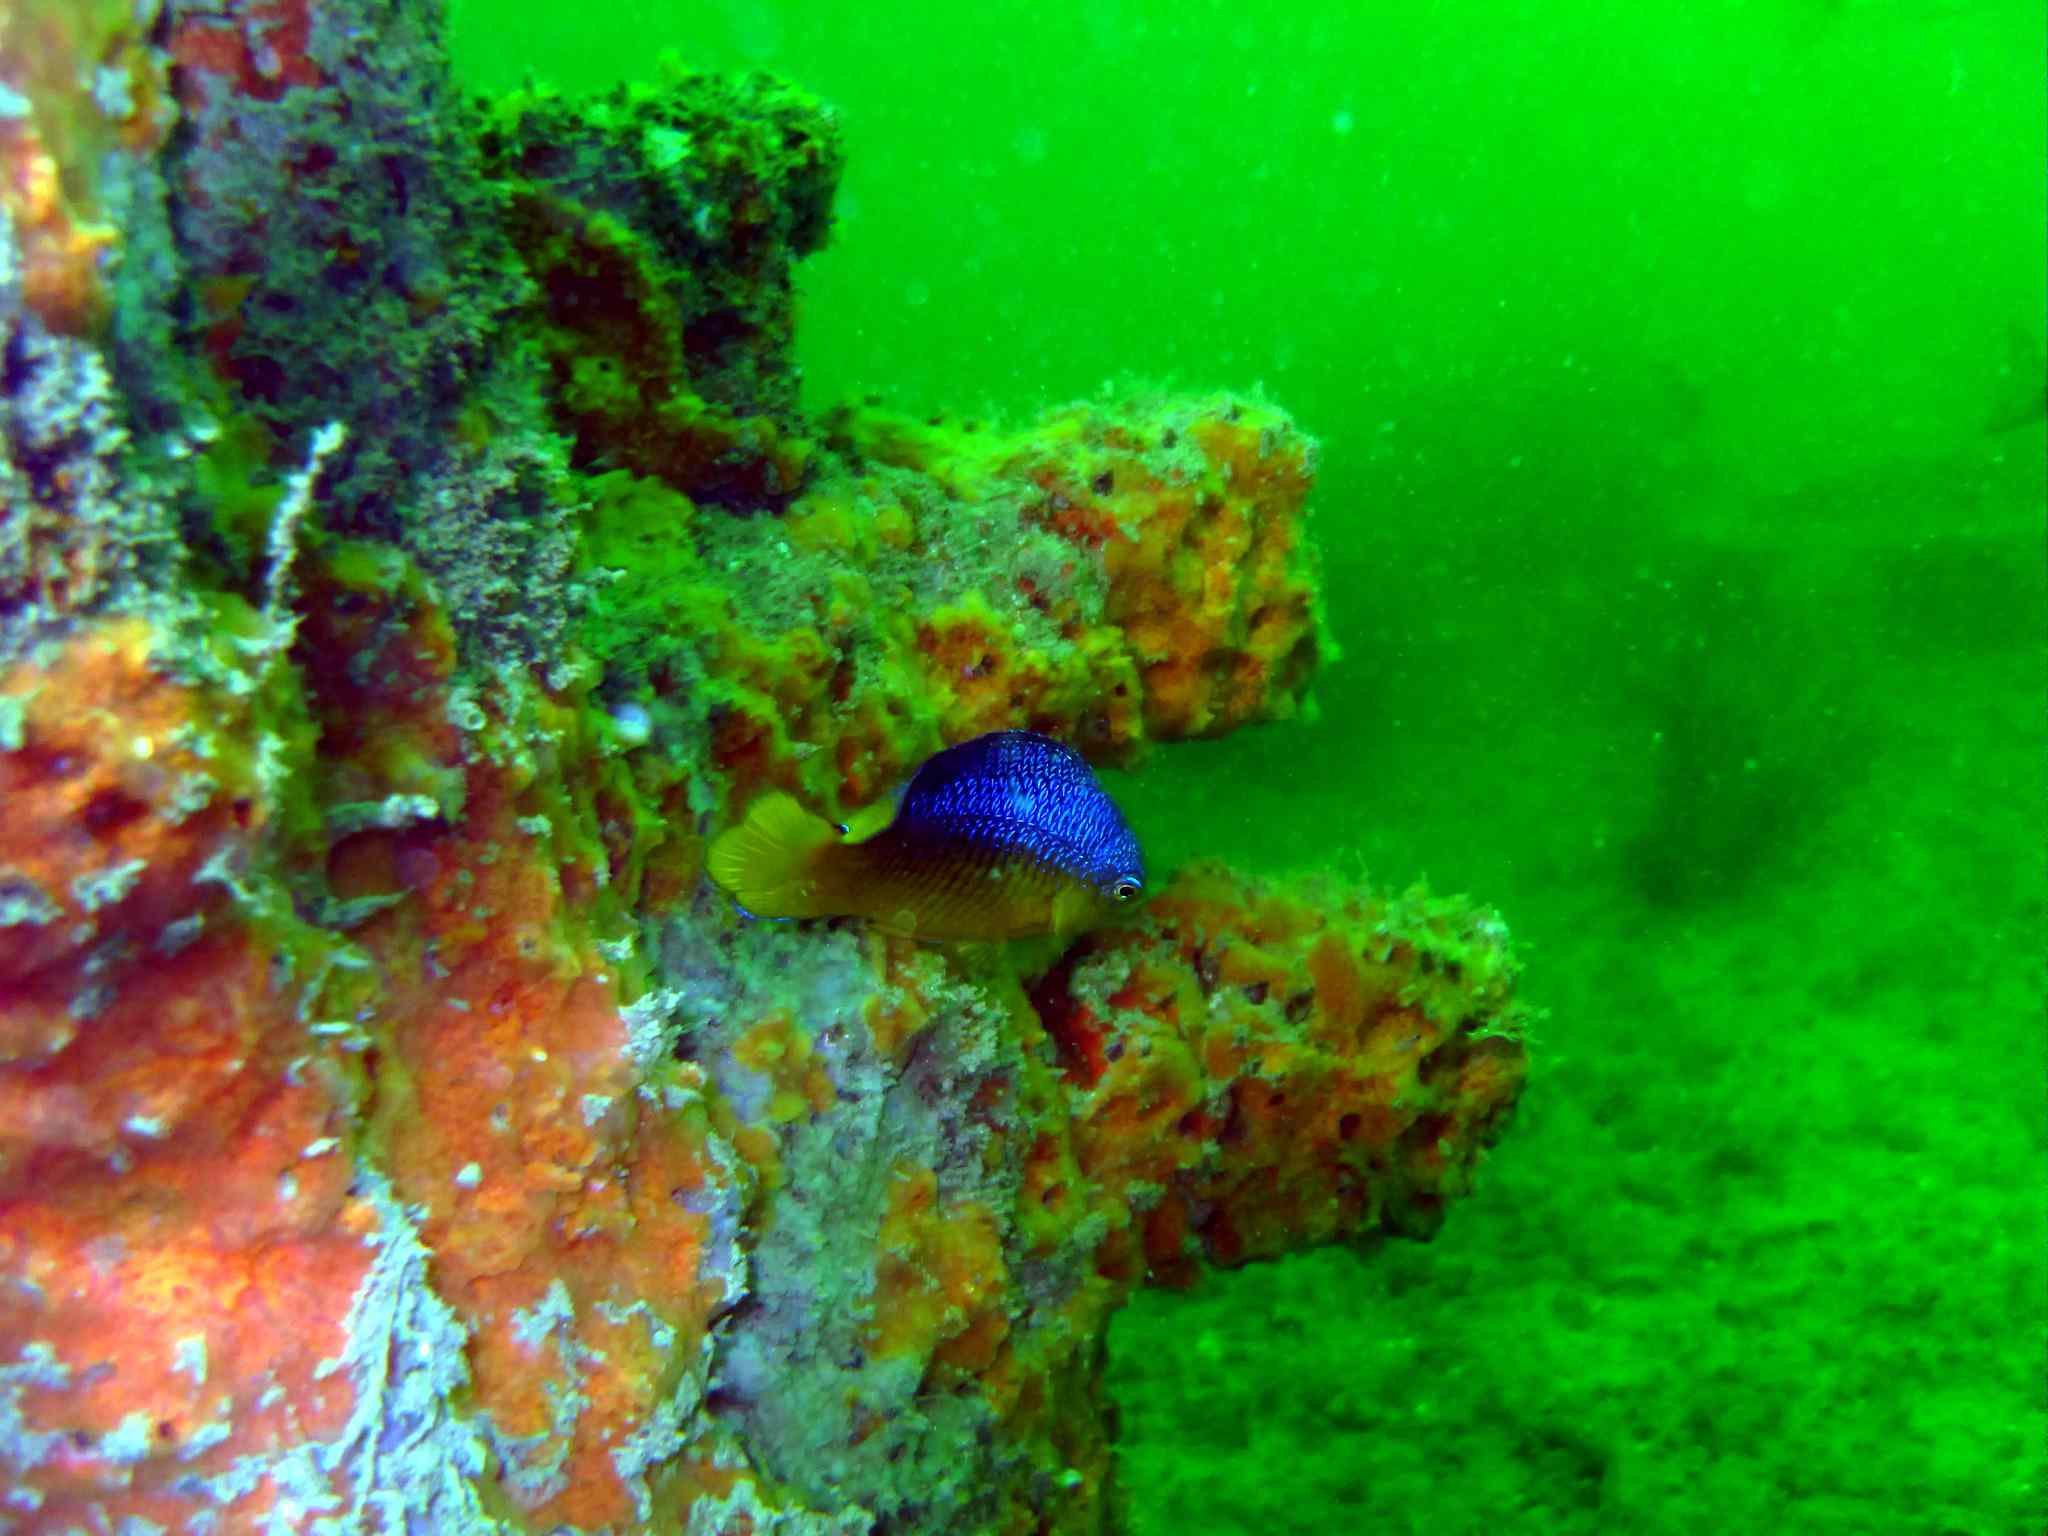 pez damisela azul cultivando algas en agua verde